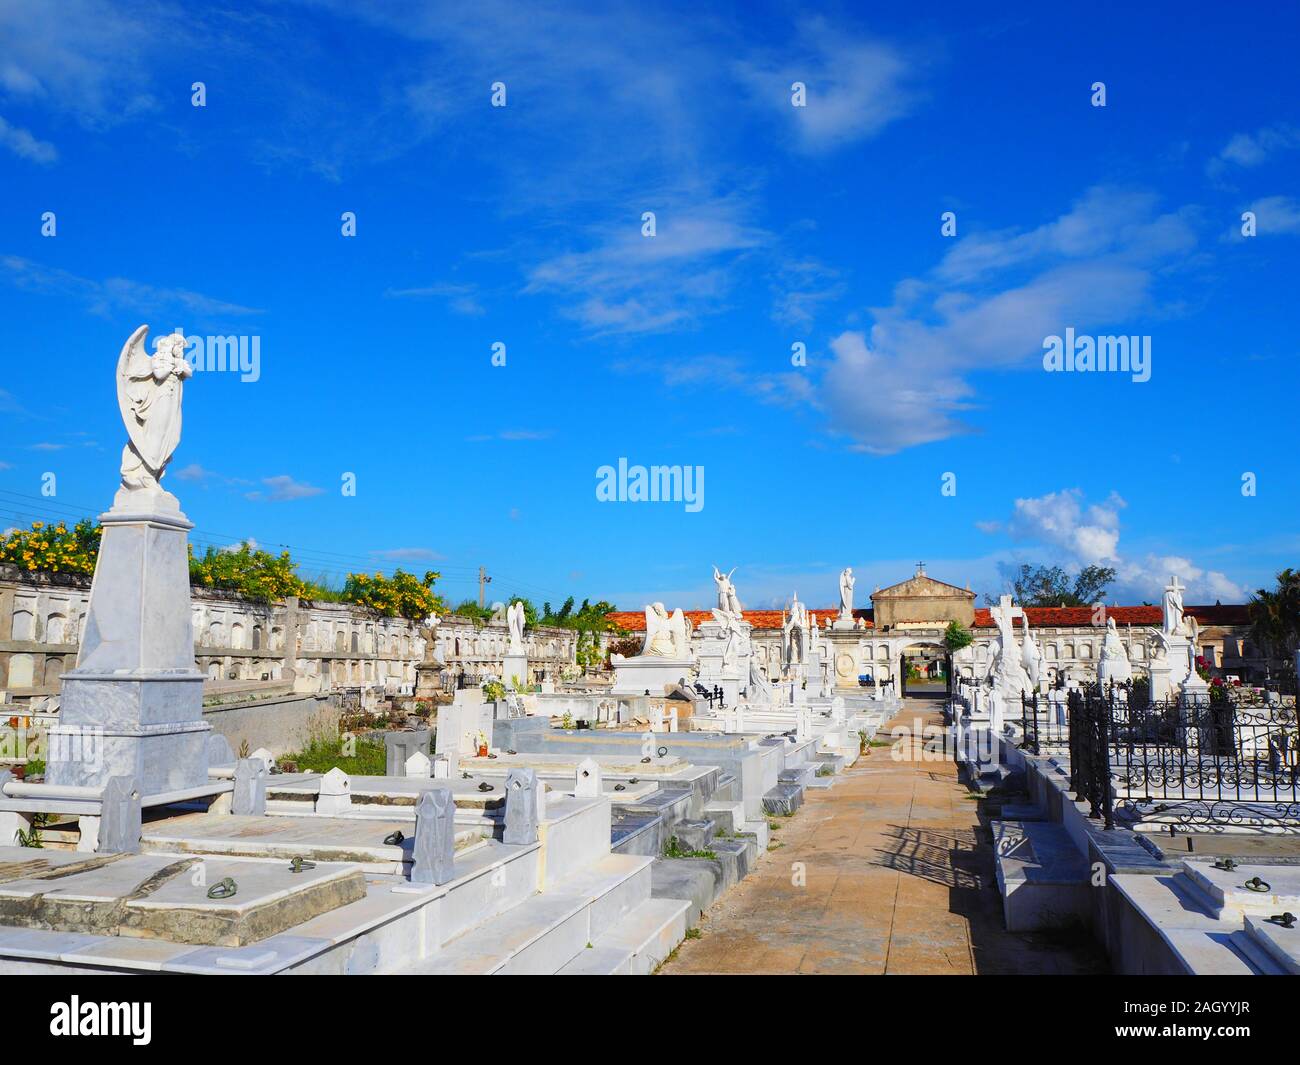 Graveyard in the Caribbean Stock Photo